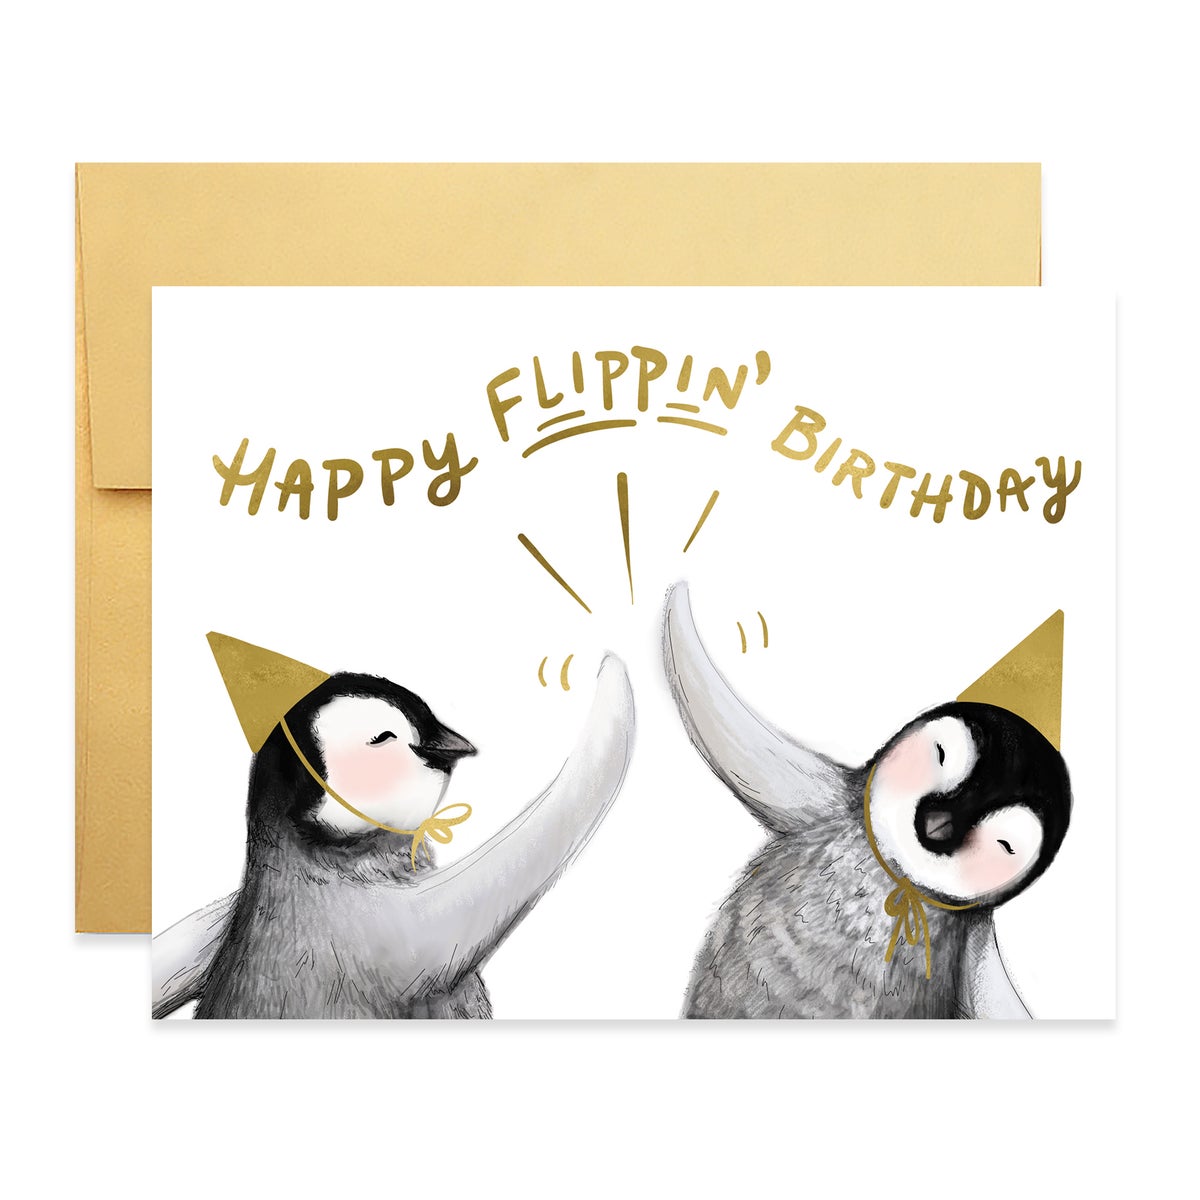 Happy Flippin Birthday Greeting Card